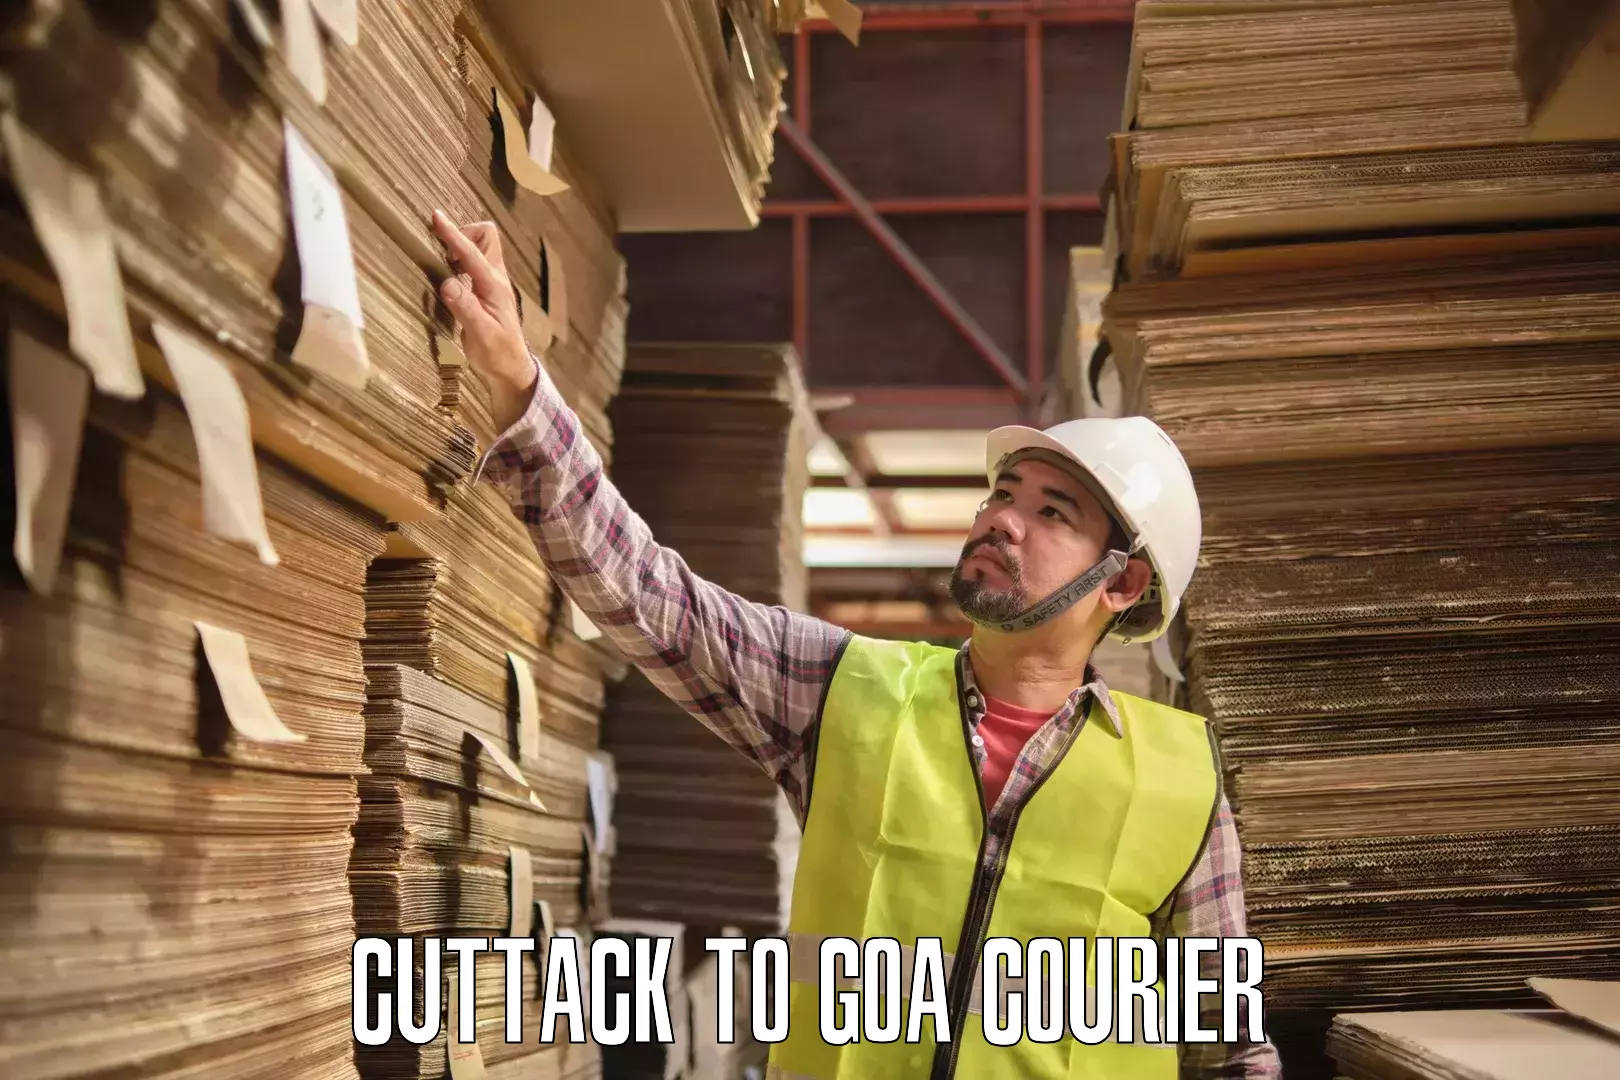 Digital courier platforms Cuttack to Goa